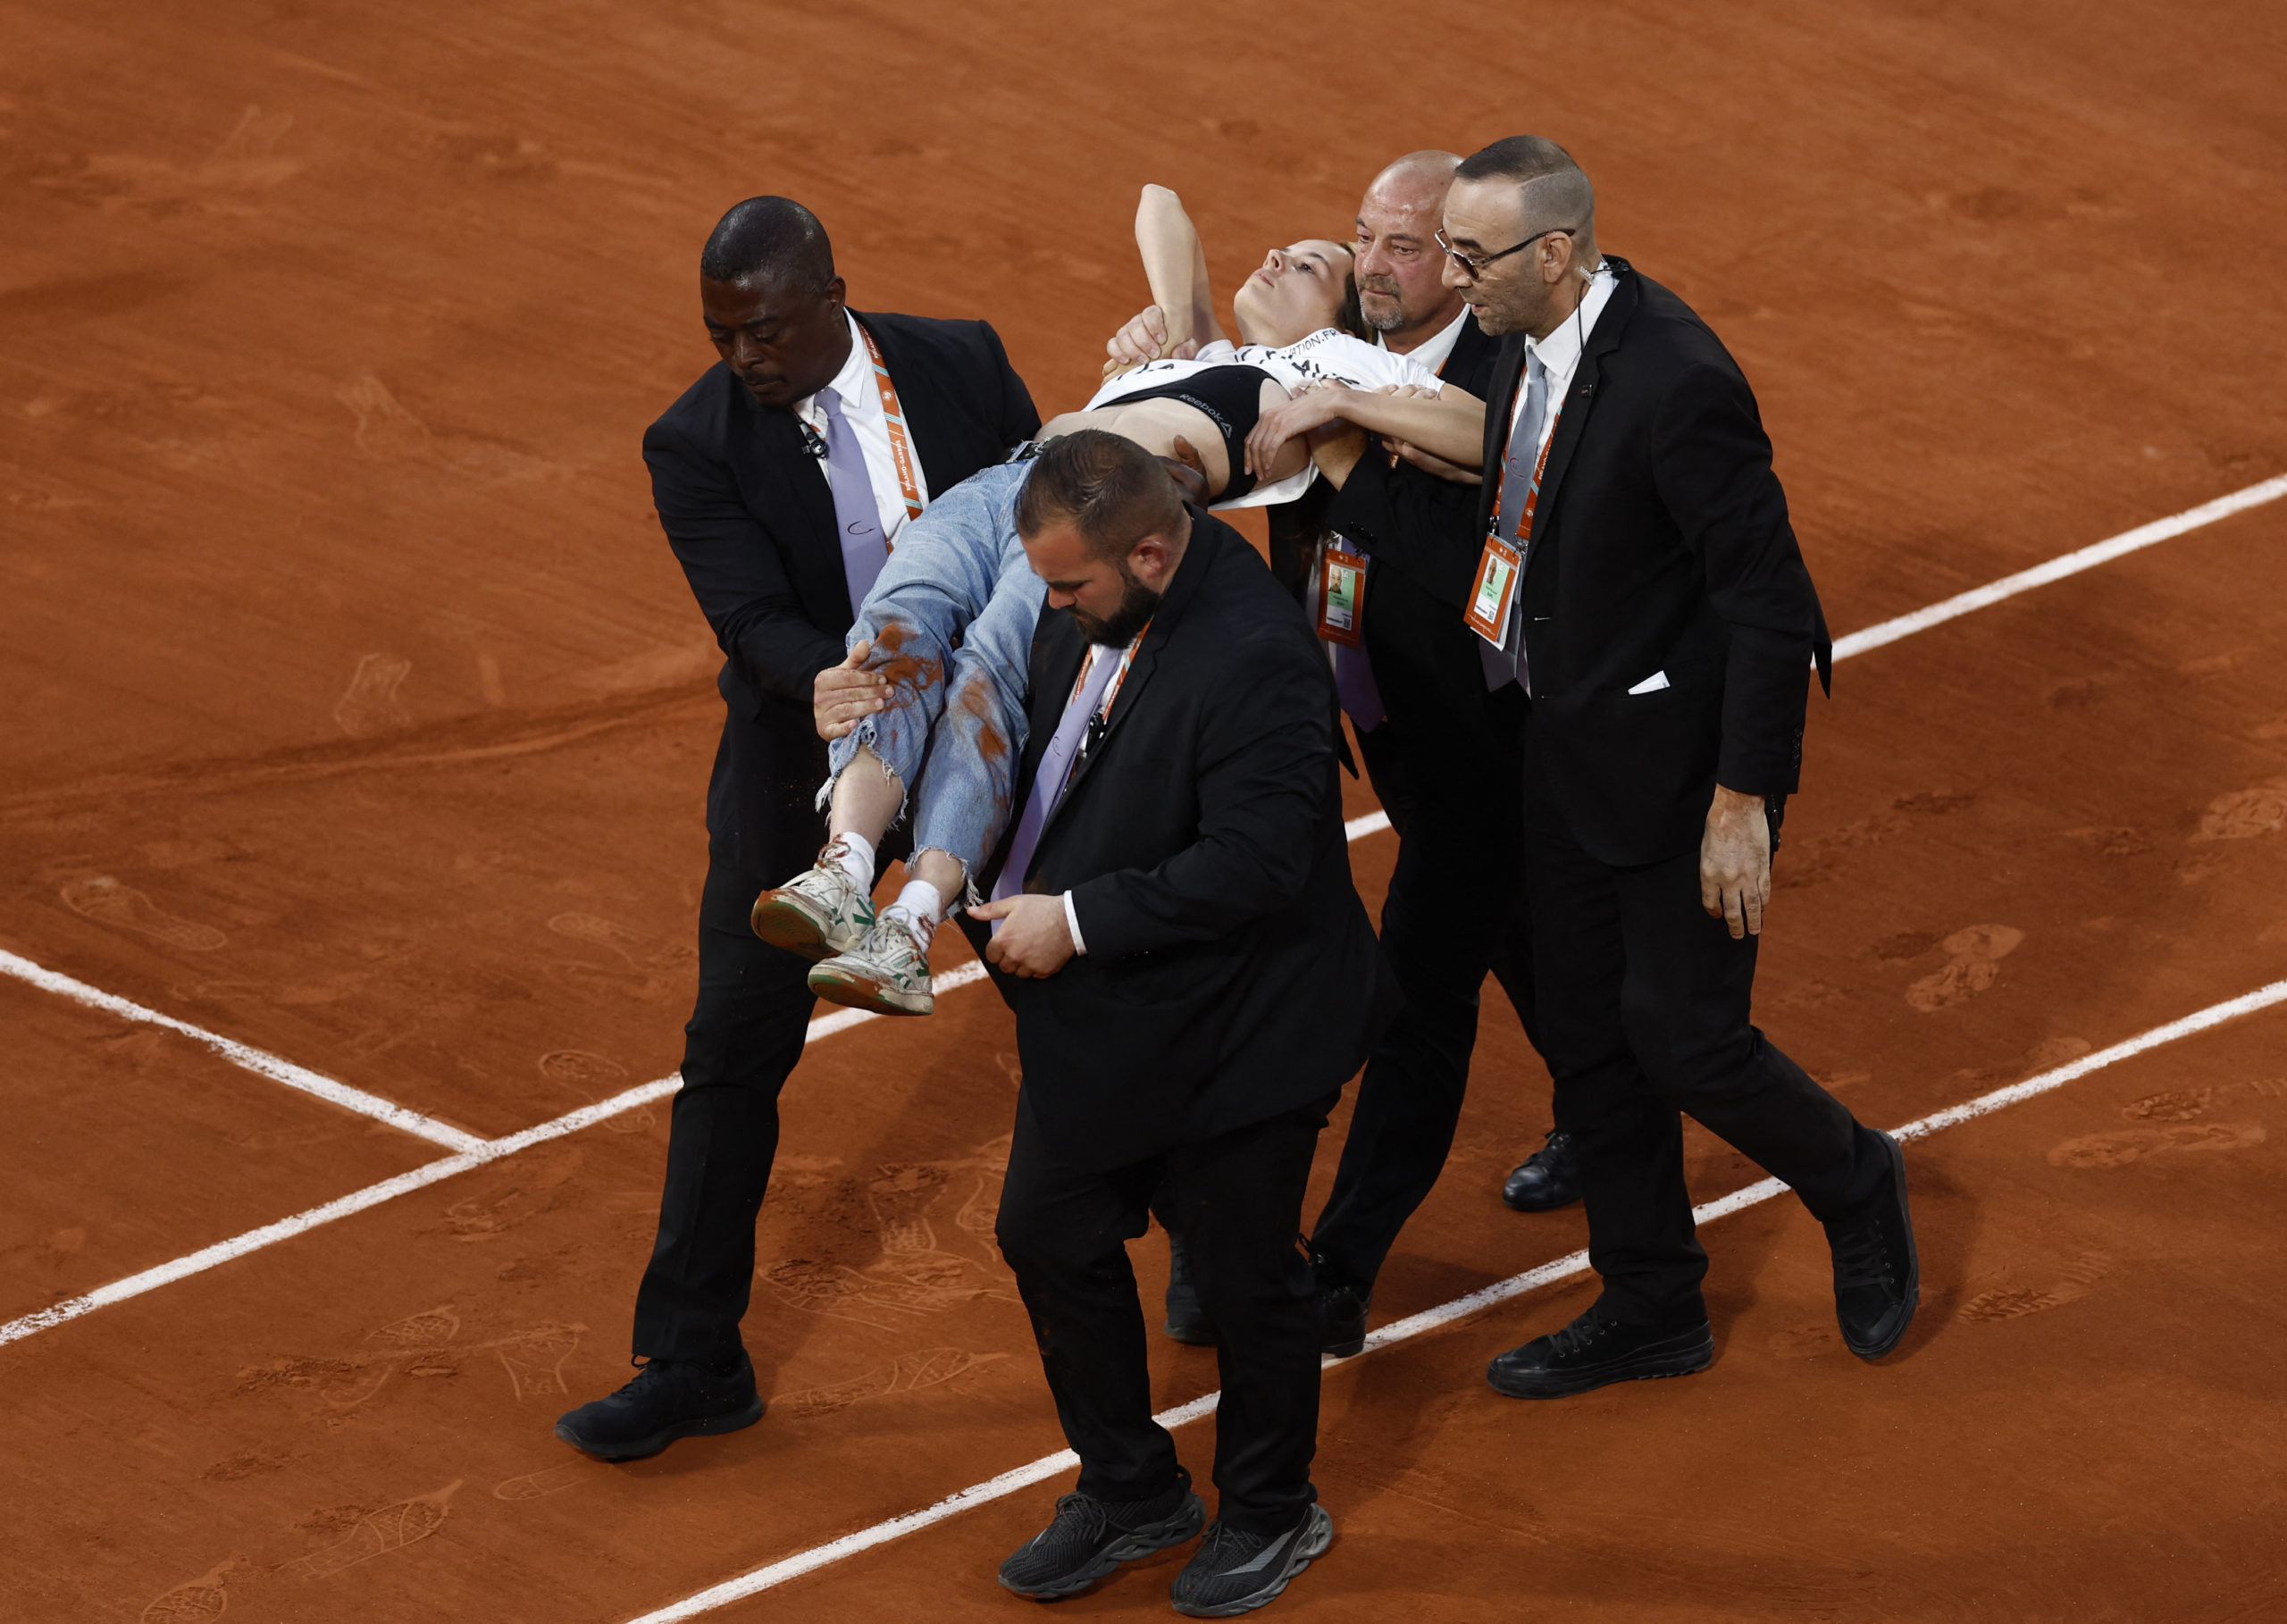 Tenis - Prancis Terbuka - Roland Garros, Paris, Prancis - 3 Juni 2022 Anggota keamanan turun dari lapangan seorang pengunjuk rasa setelah dia mengikat dirinya ke net selama semi final antara Casper Ruud dari Norwegia dan Marin Cilic dari Kroasia REUTERS/Yves Herman